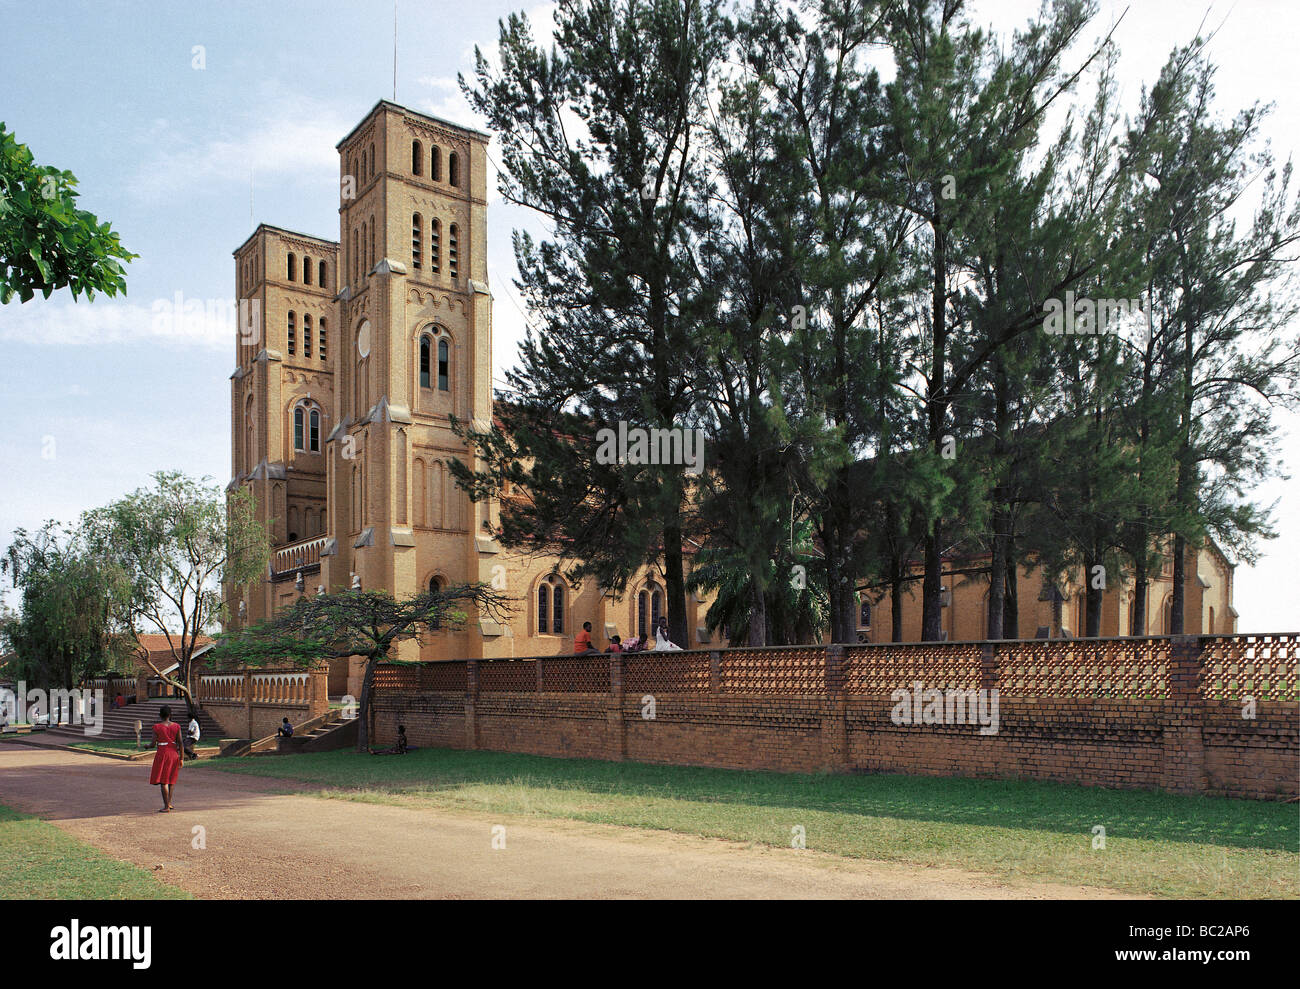 Rubaga römisch-katholische Kathedrale Kampala Uganda Ostafrika religiöse Stätte denkmalgeschützten Gebäude aus Ziegeln im romanischen Stil gebaut Stockfoto